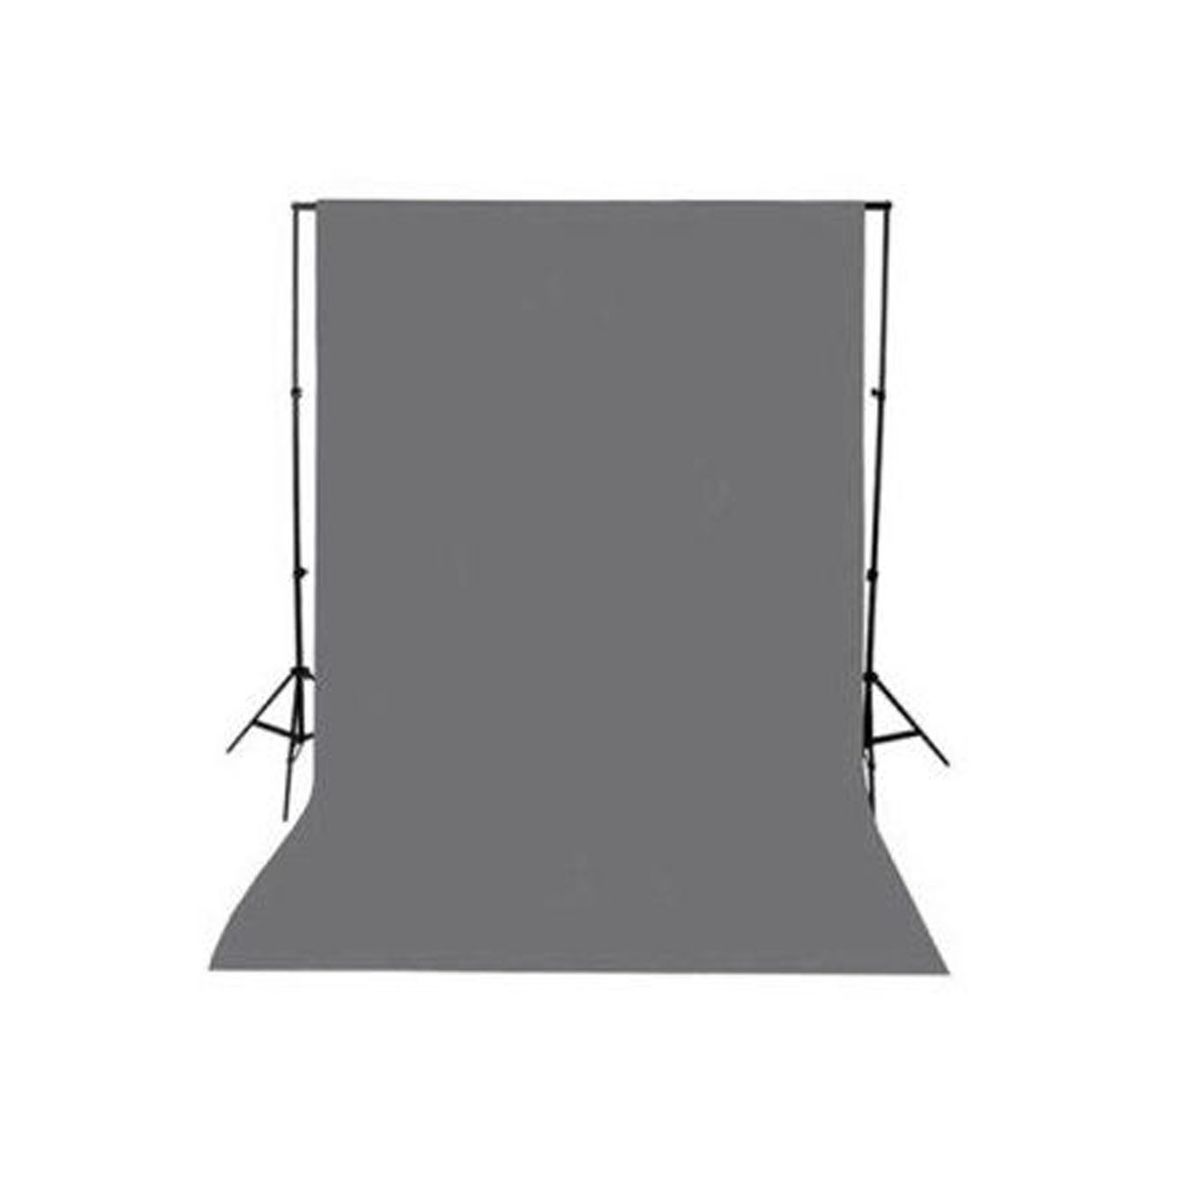 Linfot 3.2X5 PVC Grey Backdrop with Pole & Carry Case